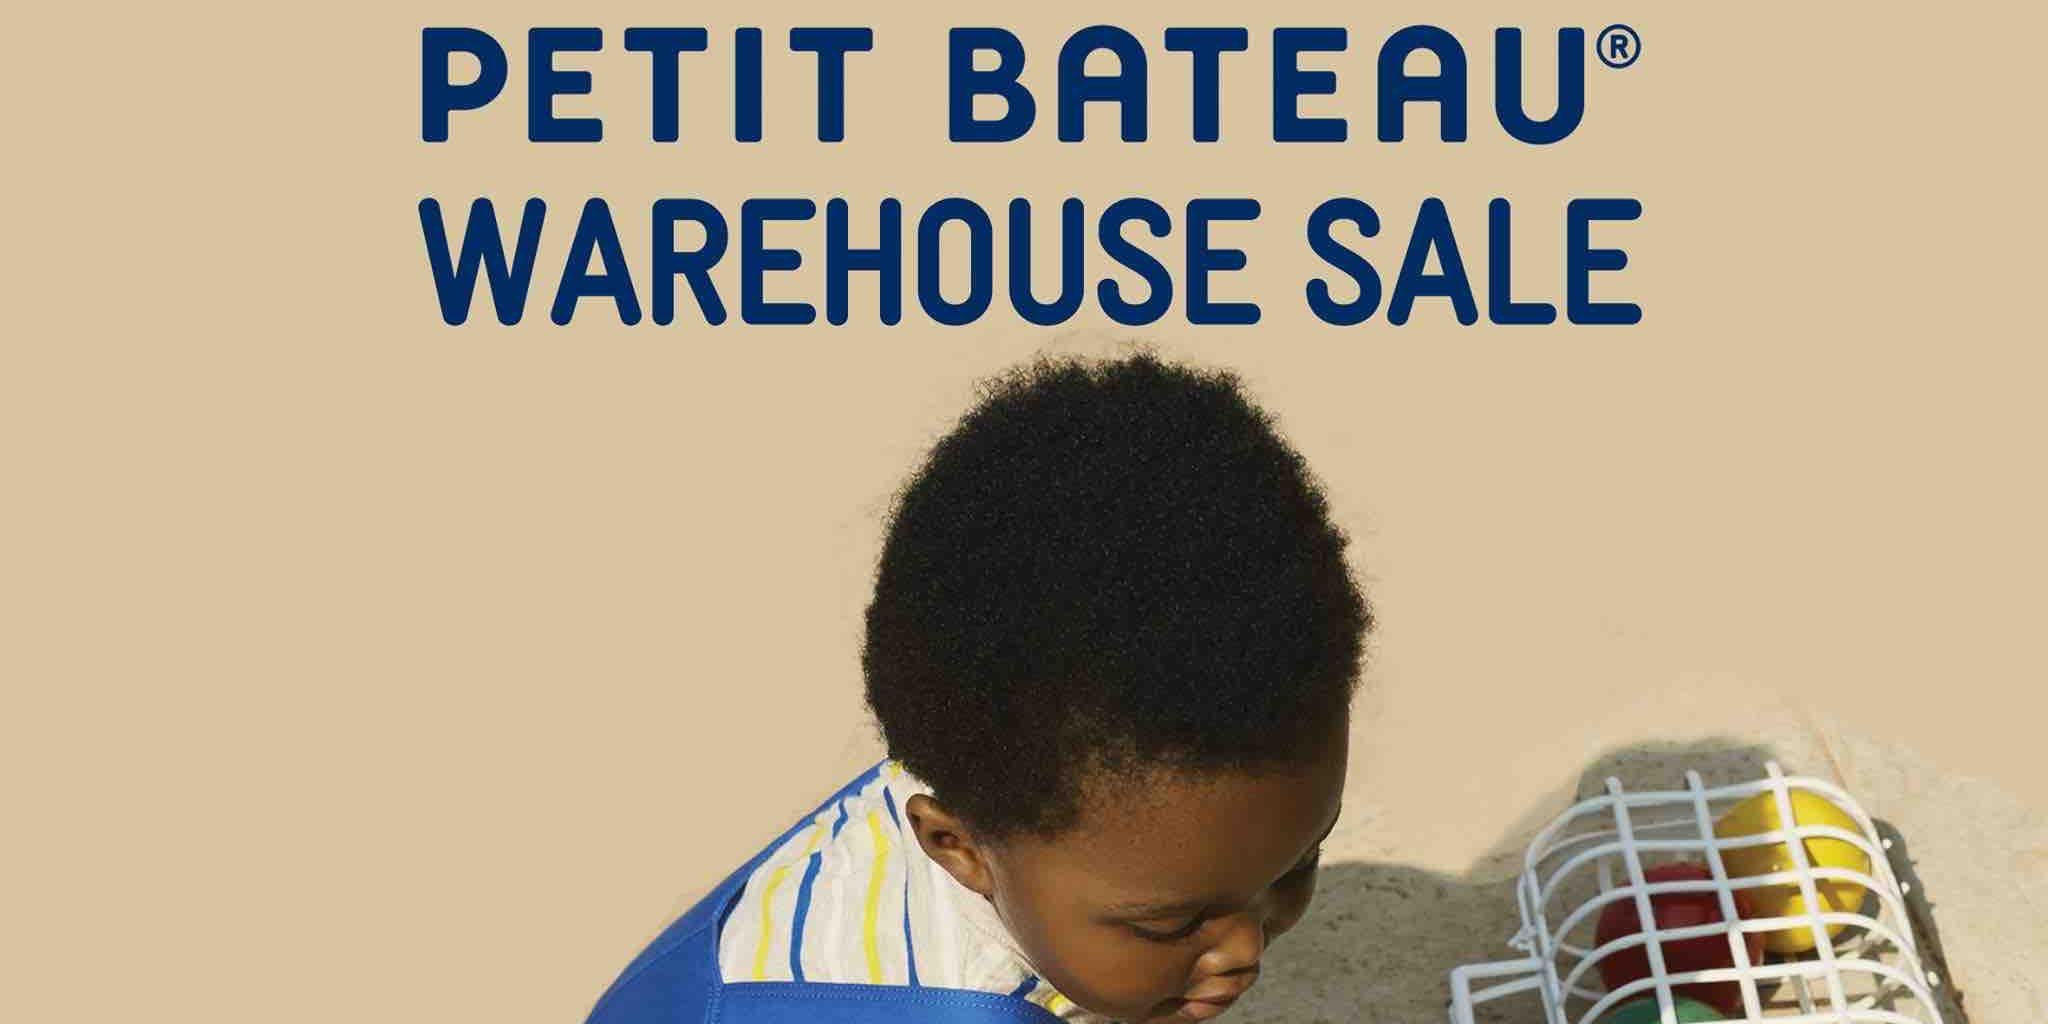 Petit Bateau Singapore 4 Days Warehouse Sale Up to 70% Off Promotion 14-17 Mar 2018